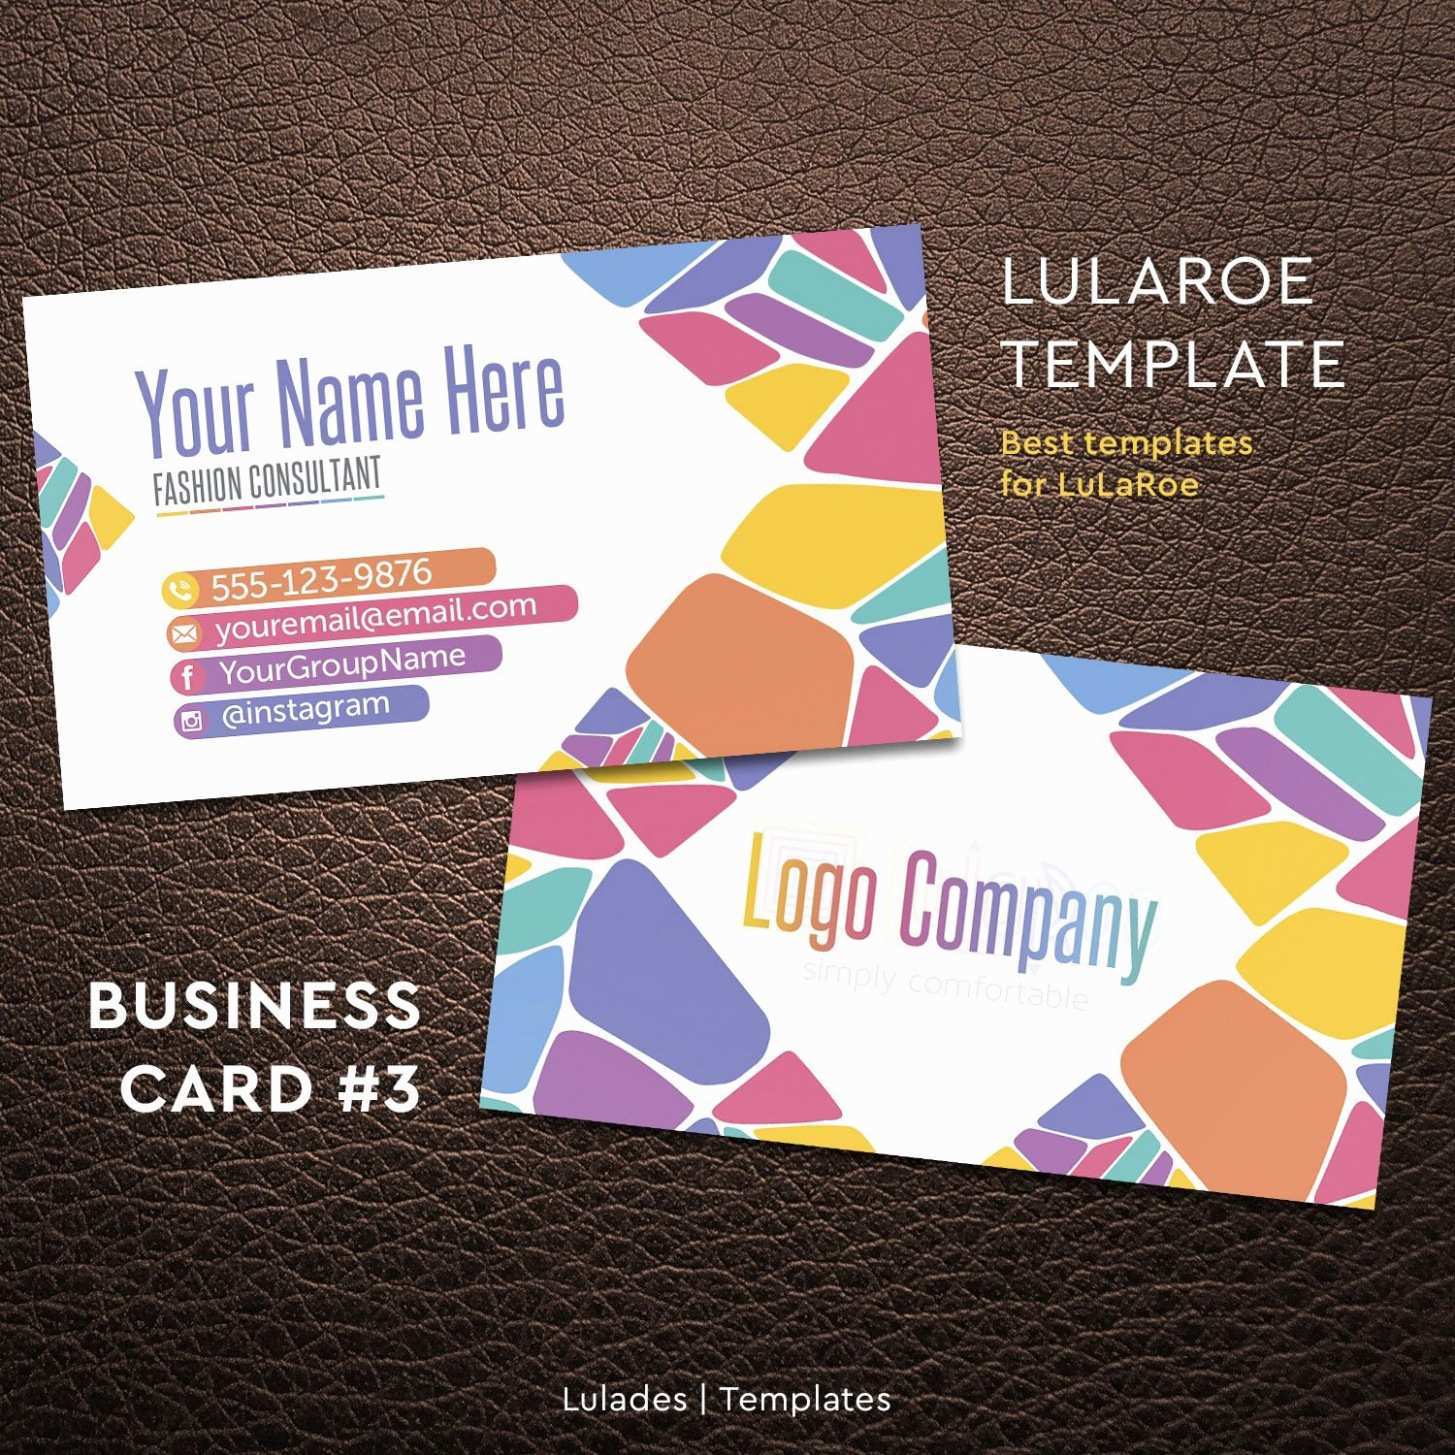 Lularoe Business Card Template Free Cards Design Templates